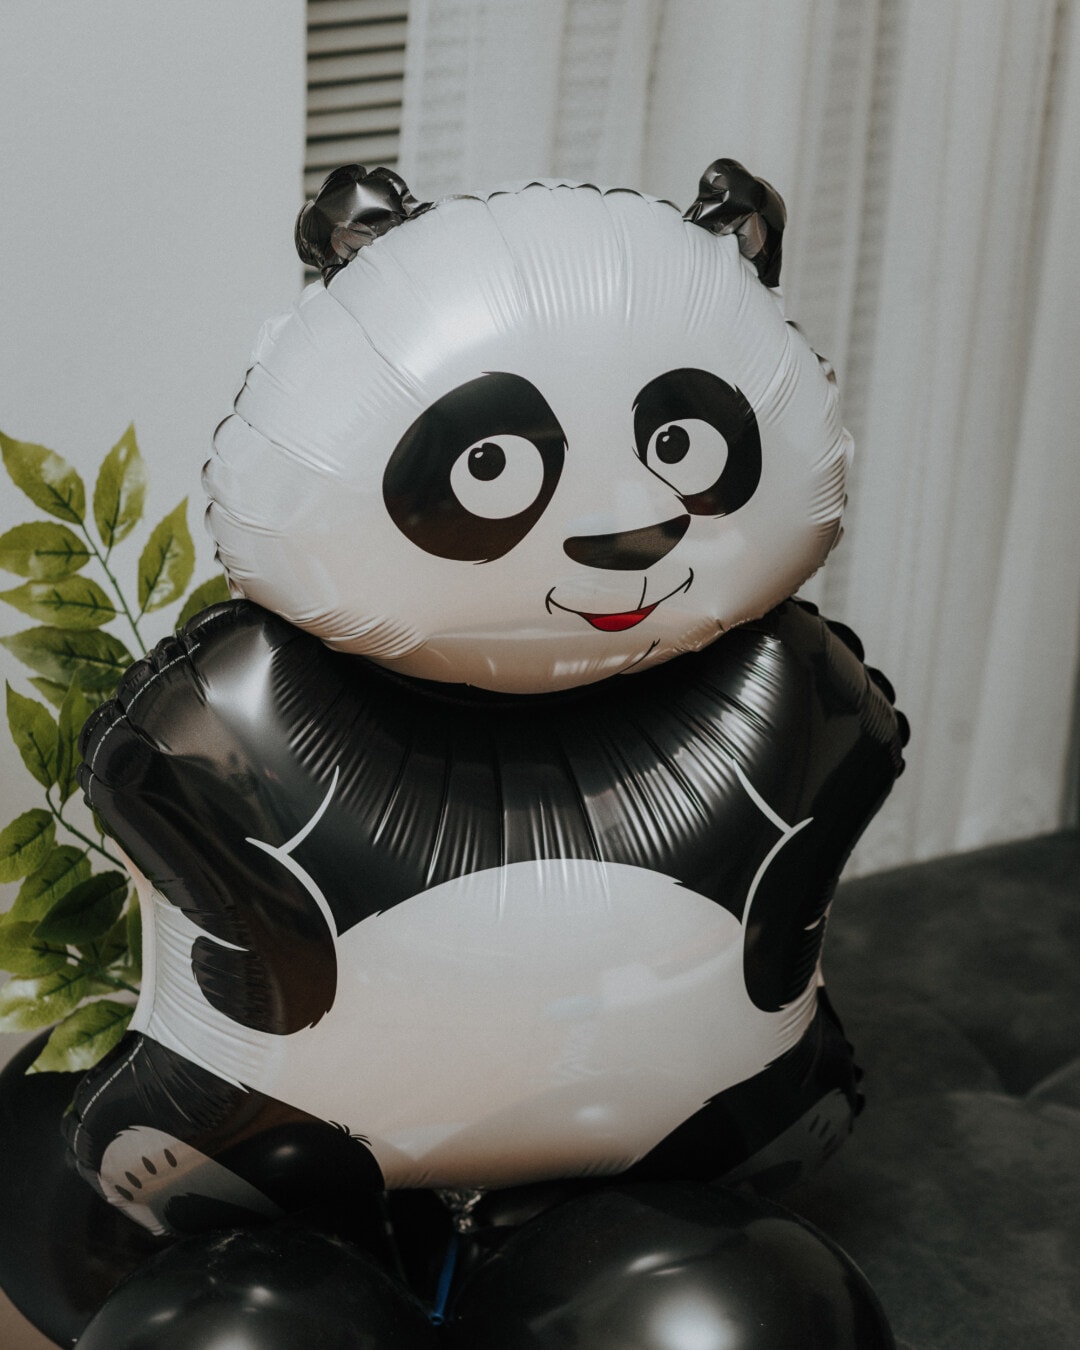 panda, balloon, toy, plastic, black and white, funny, fun, mascot, cute, object